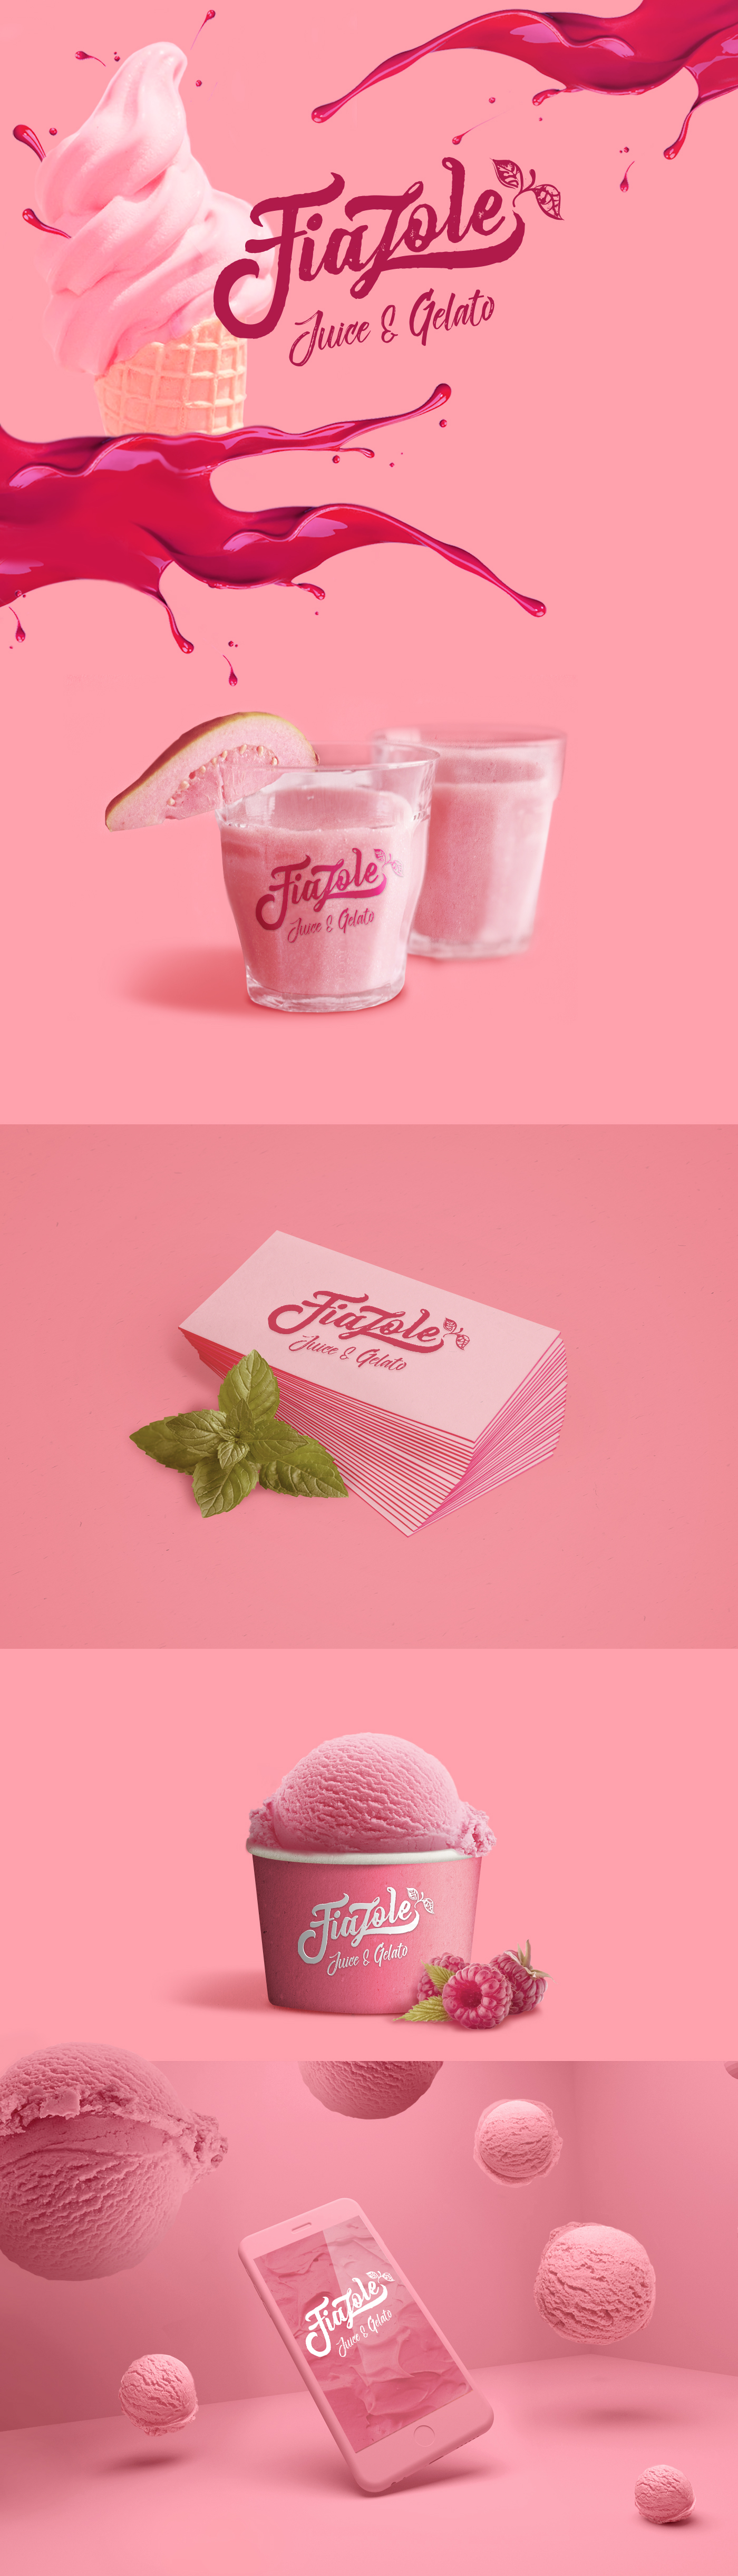 fiazole juice Gelato brand logo pink fresh lettering natural ice cream